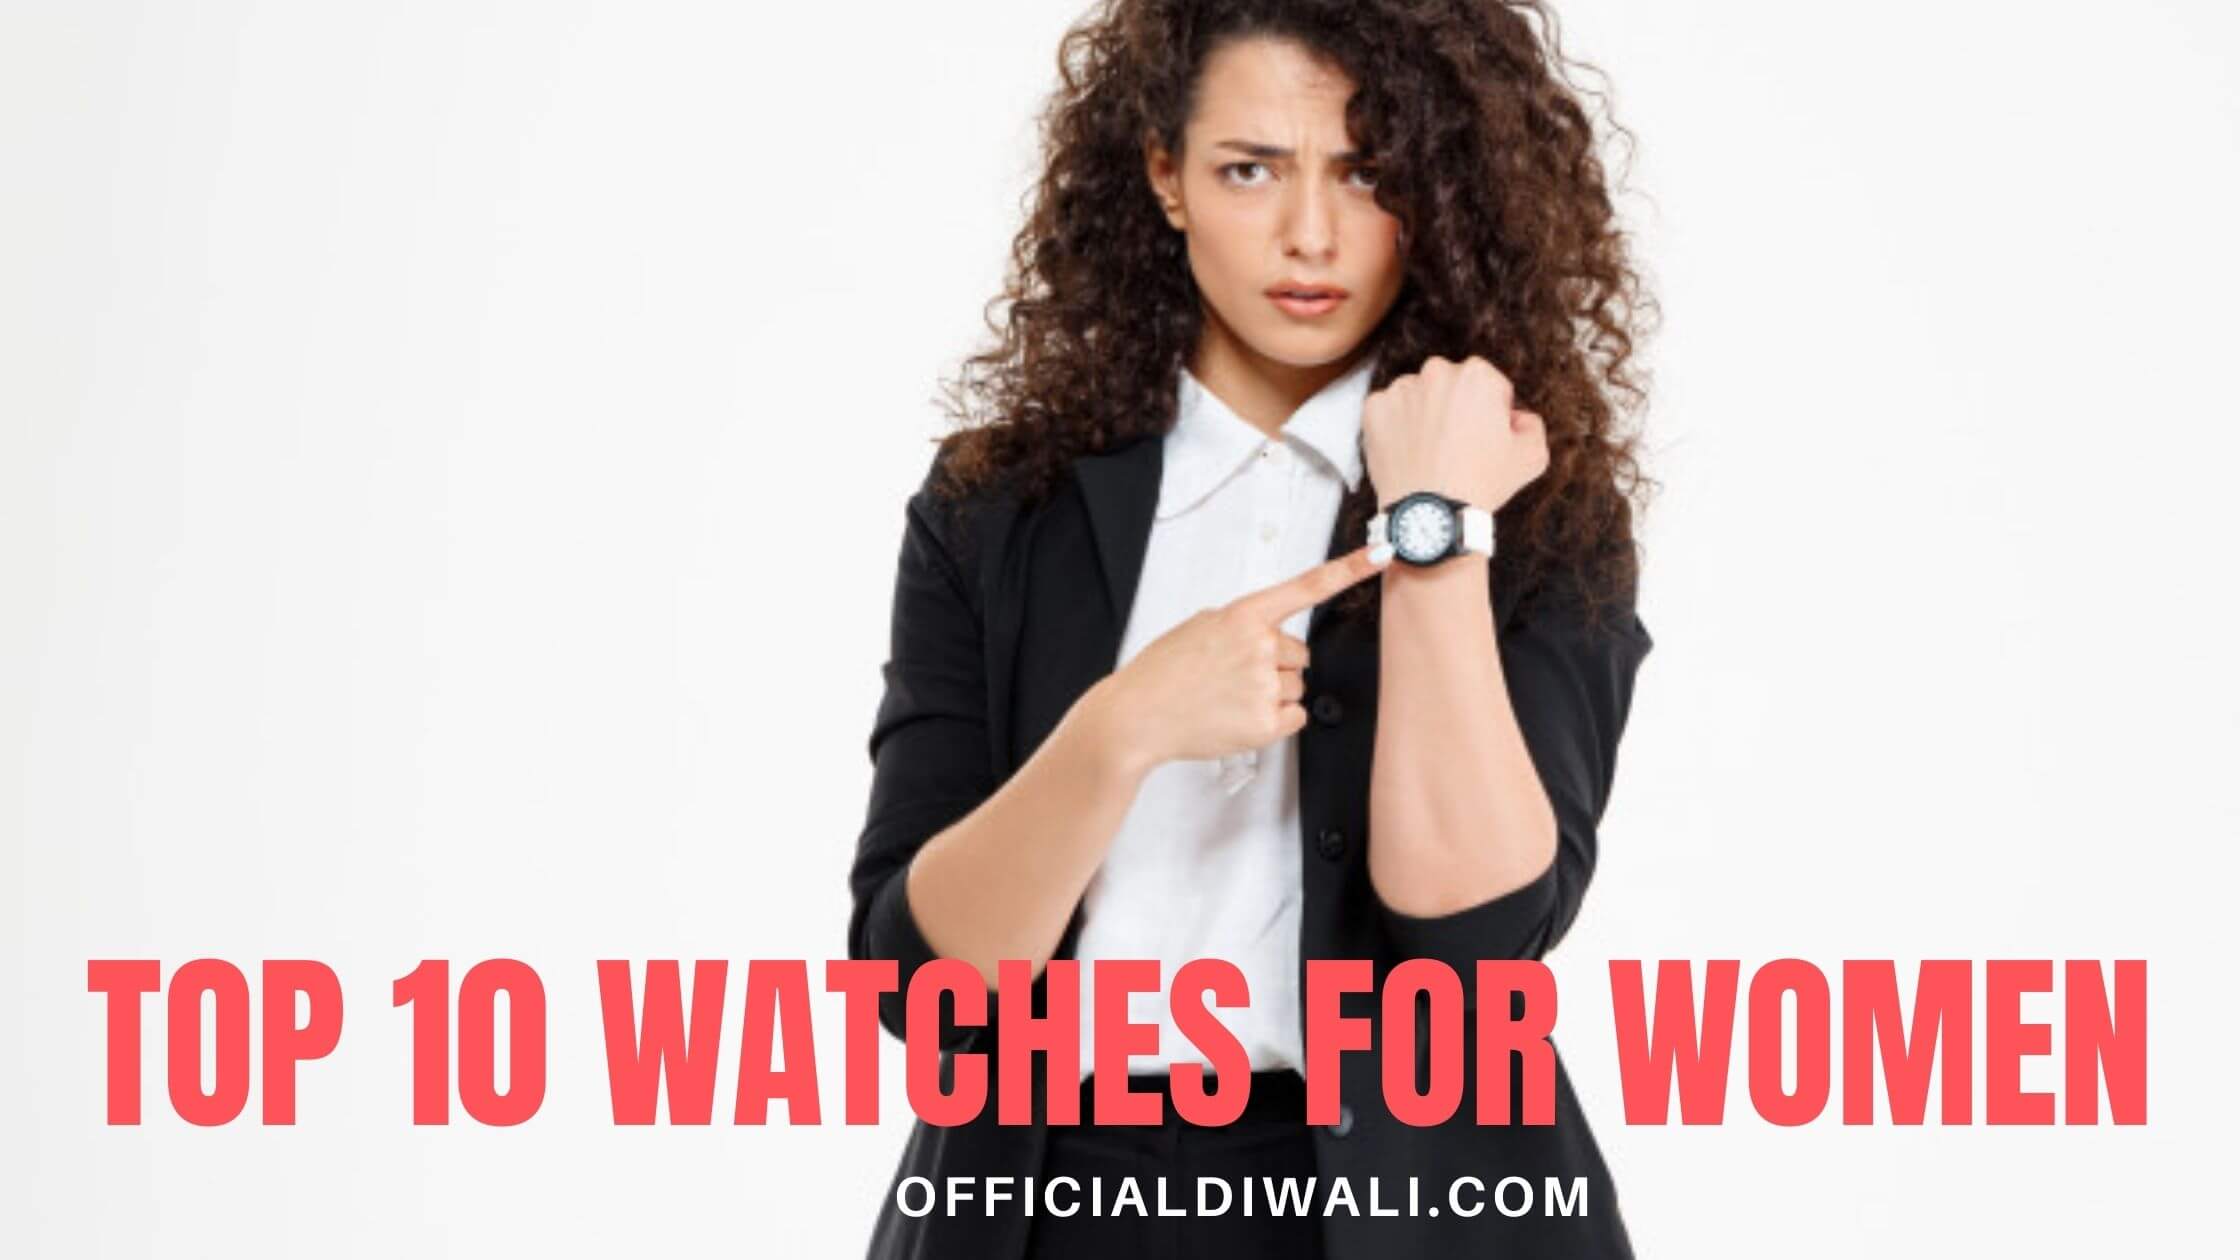 Top 10 Watches for Women - officialdiwali.com